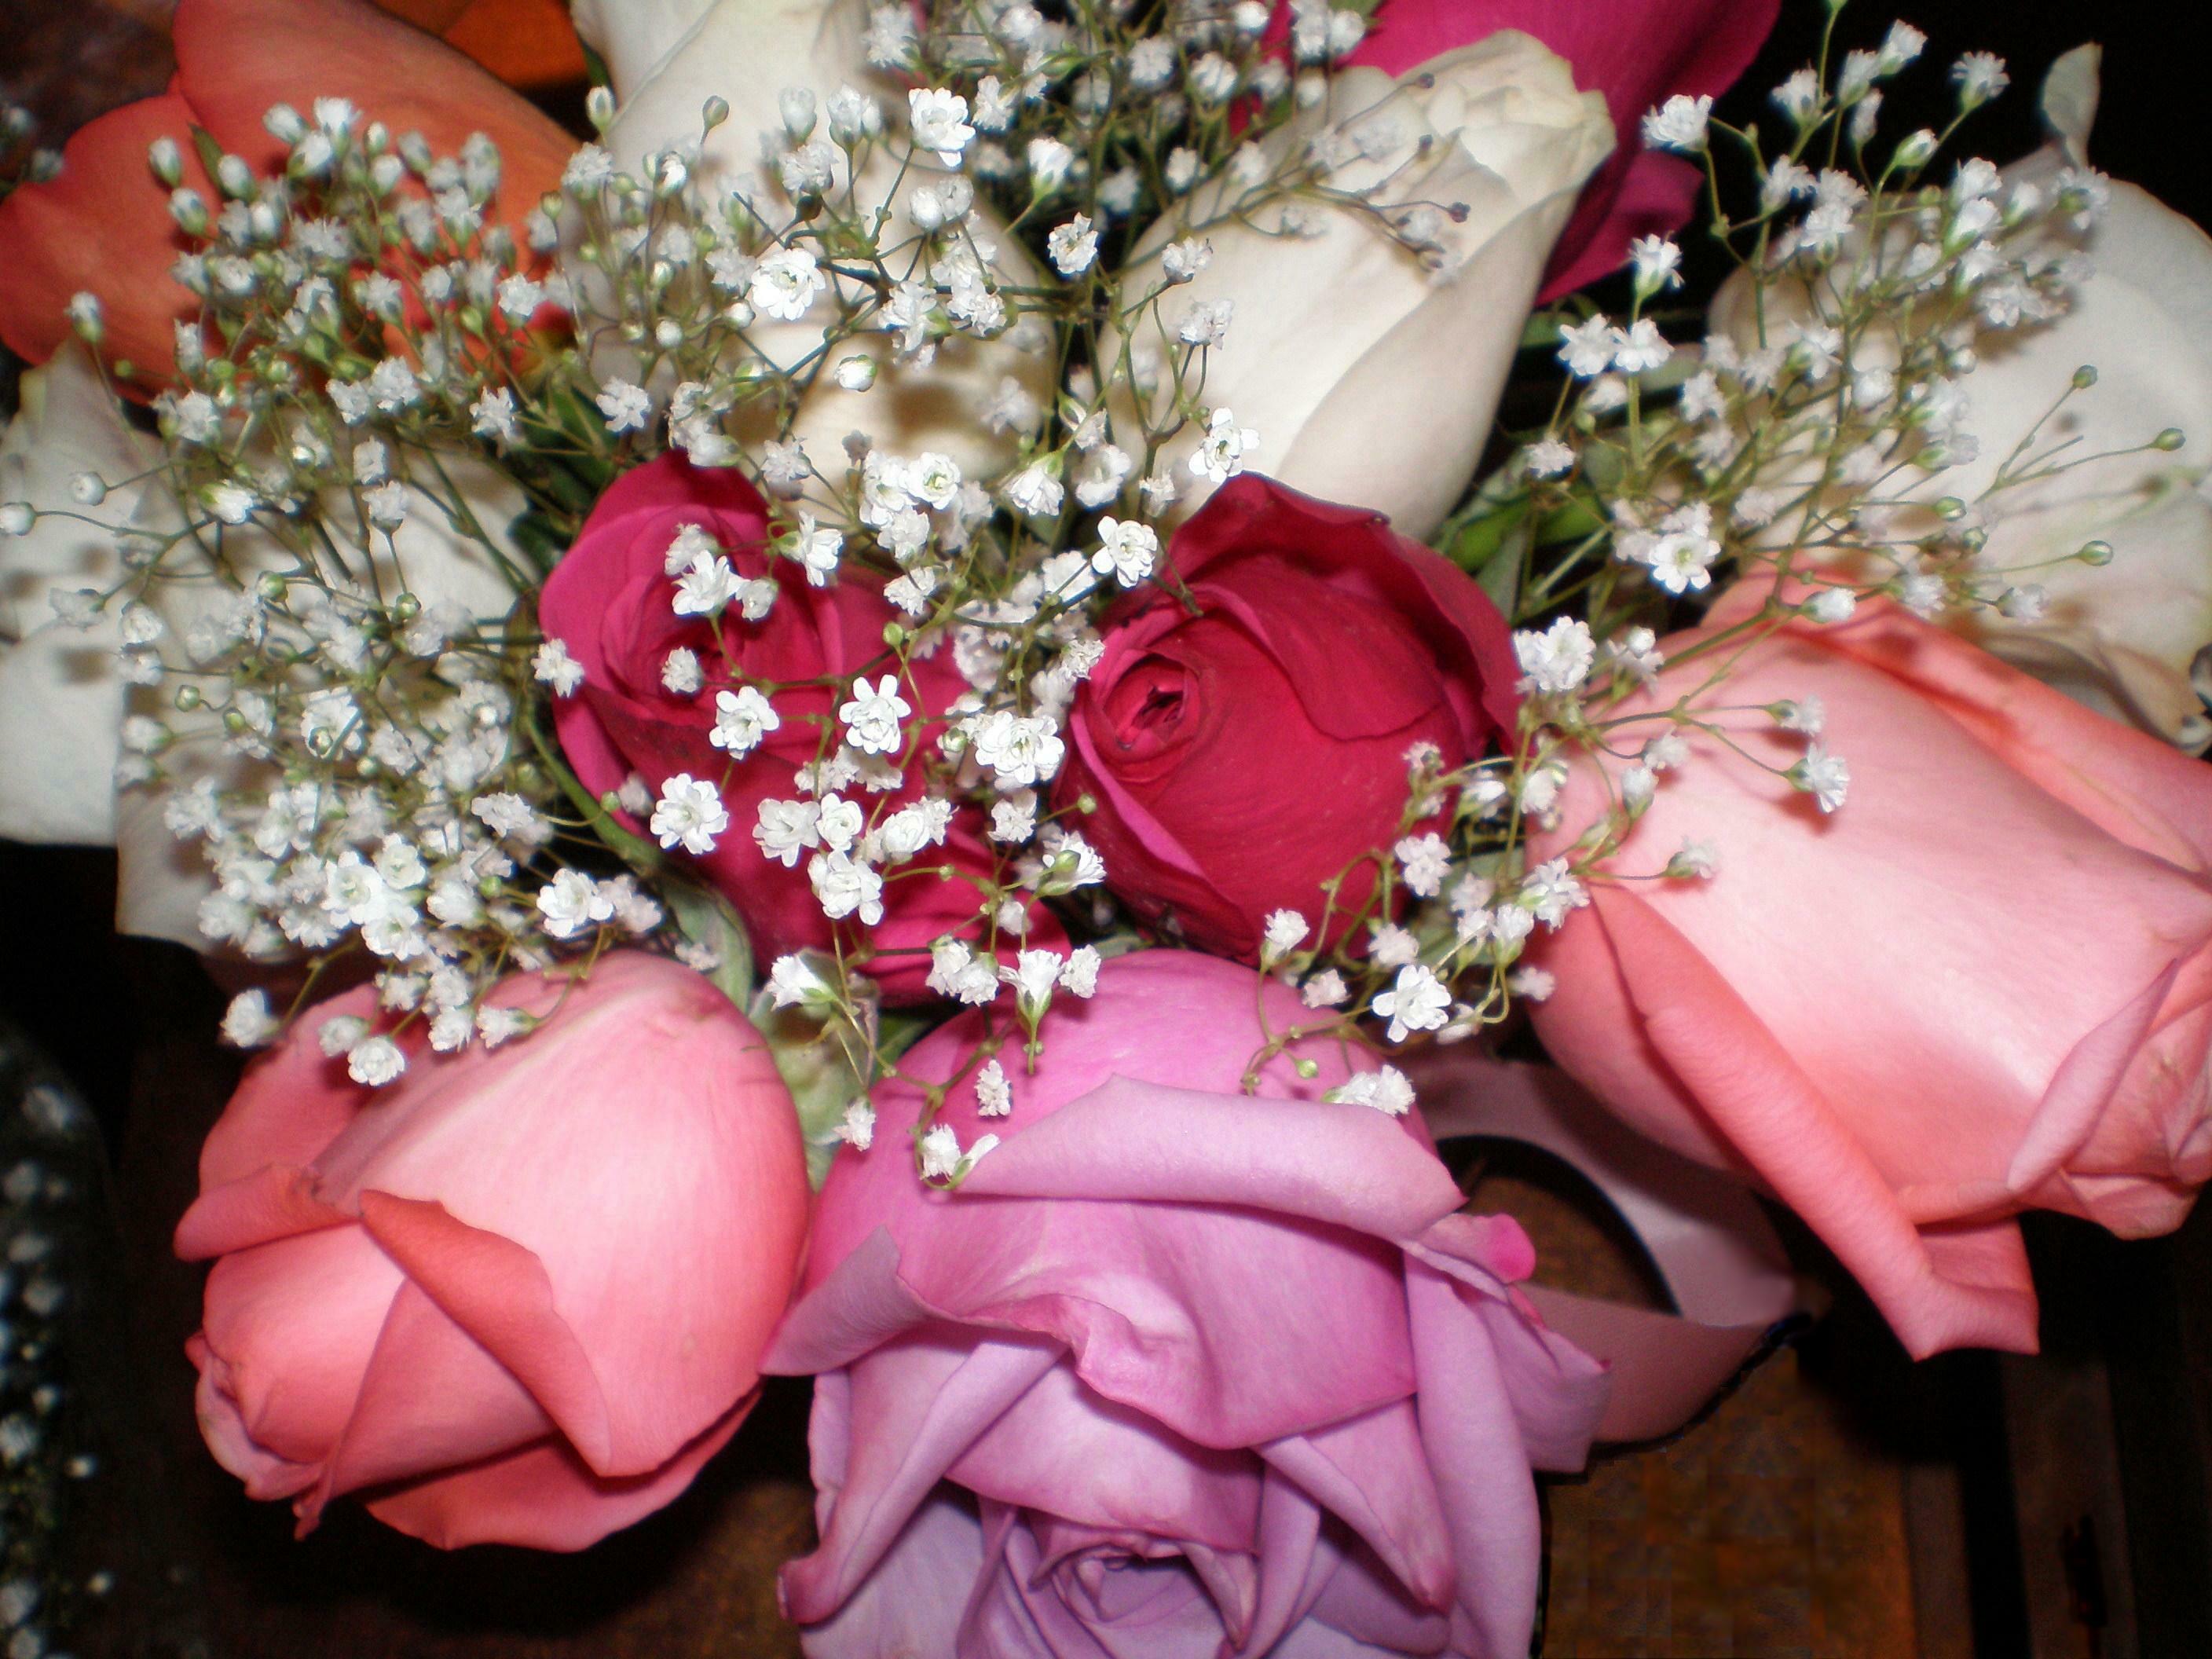 File:Fresh Rose Bouquet (2532775870).jpg - Wikimedia Commons